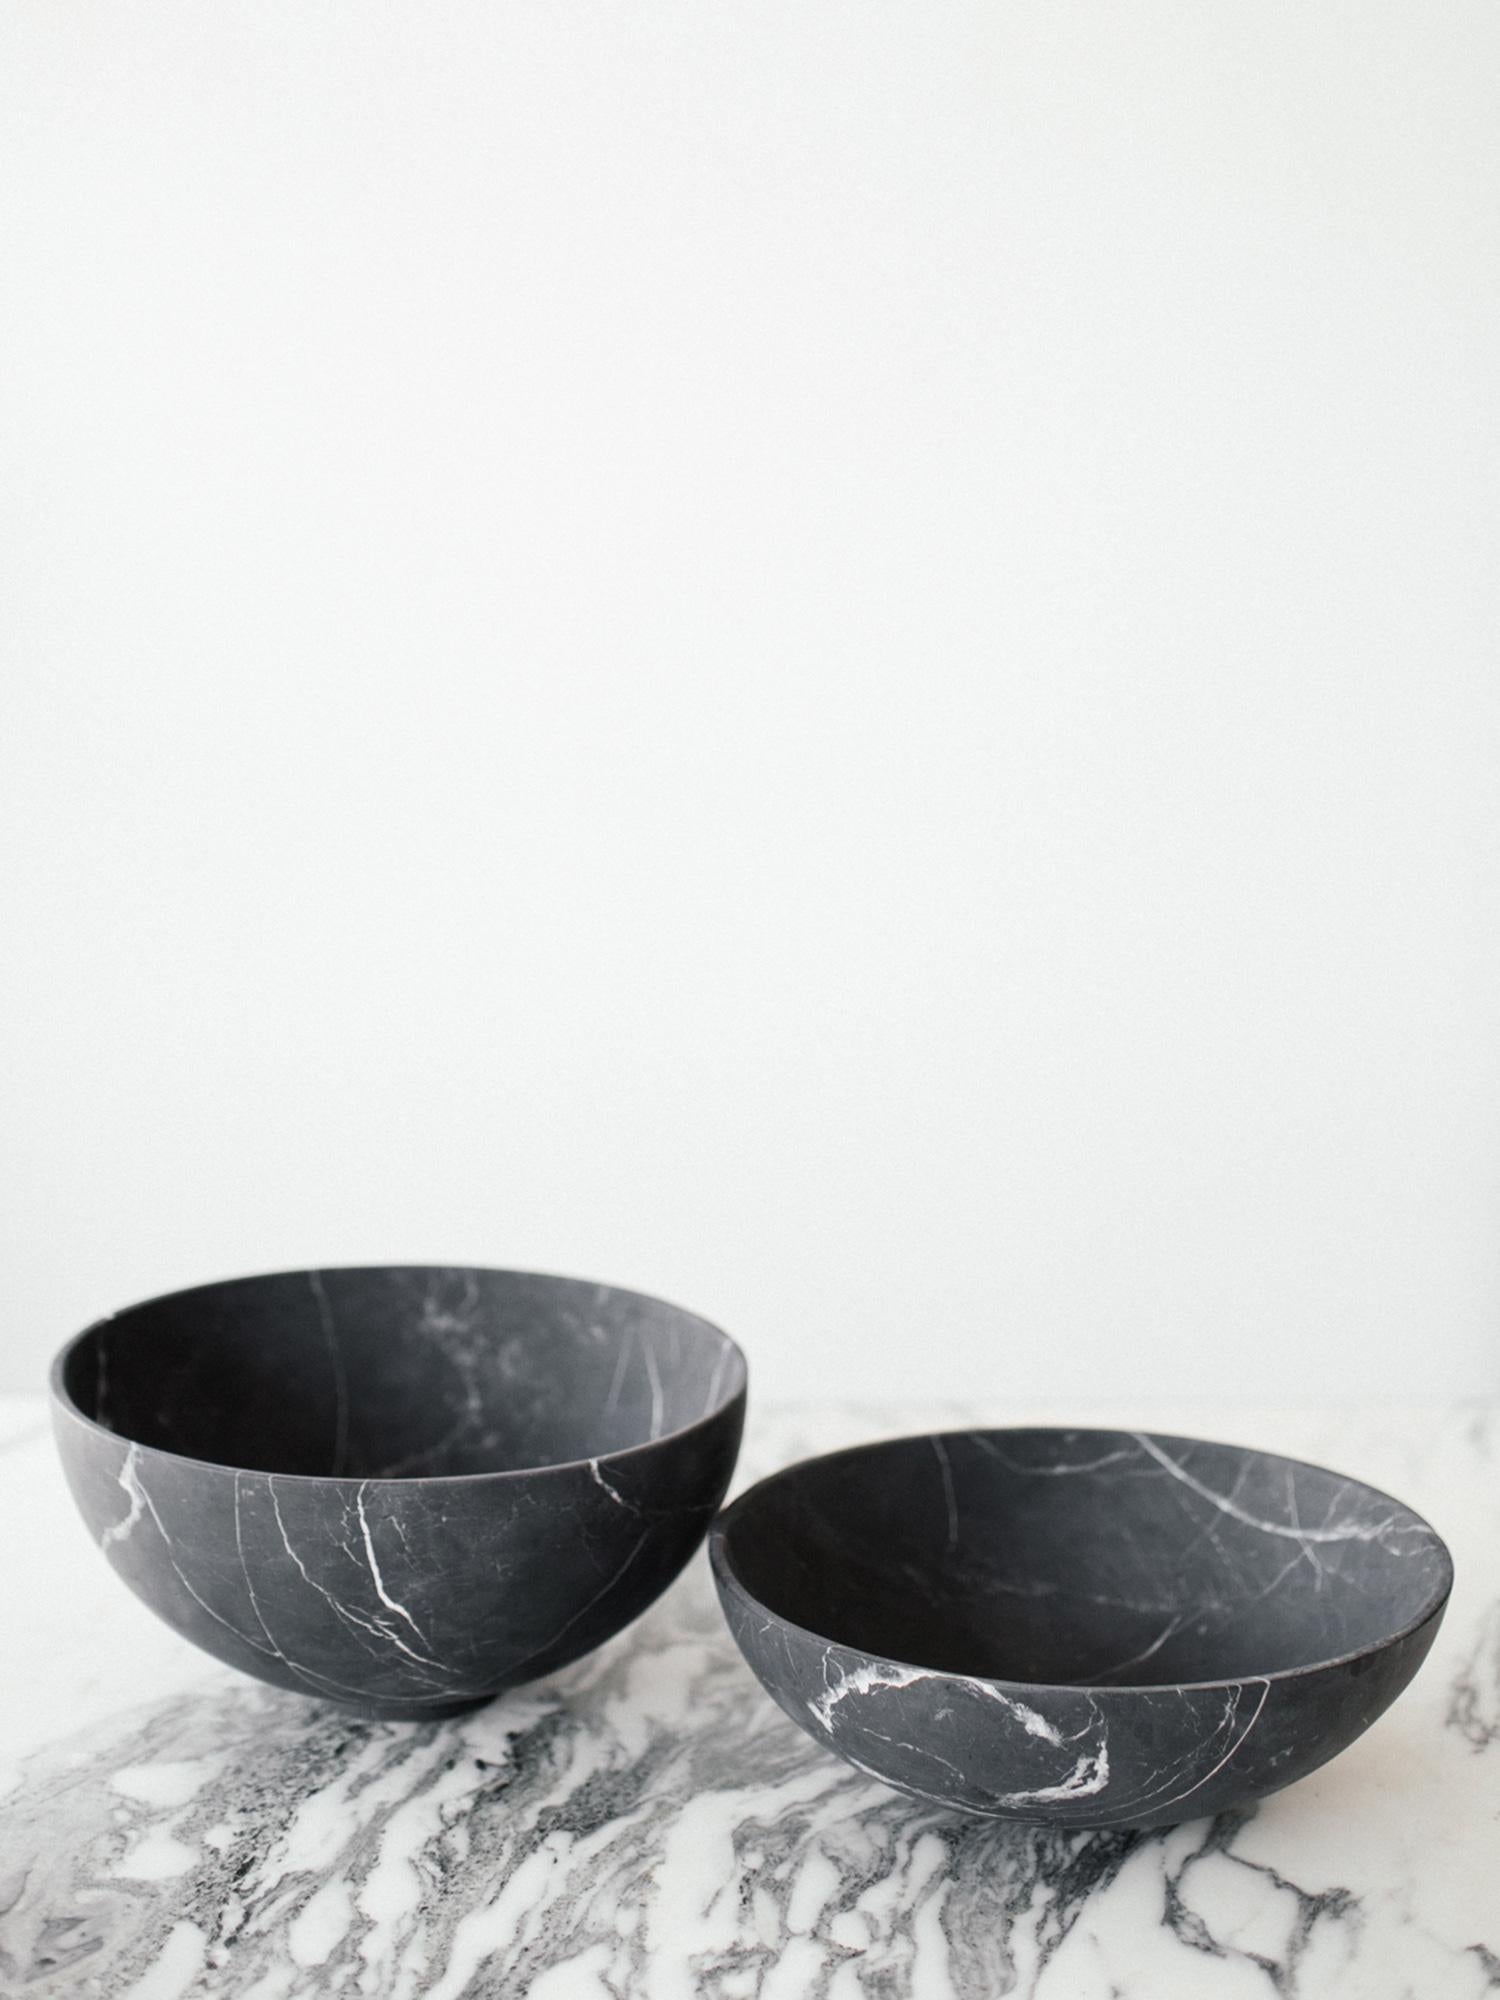 Handcut Negro Monterrey black marble from Neuvo Leon, Mexico.
Handmade by artisans in Mexico.

Measures: Grande: 12